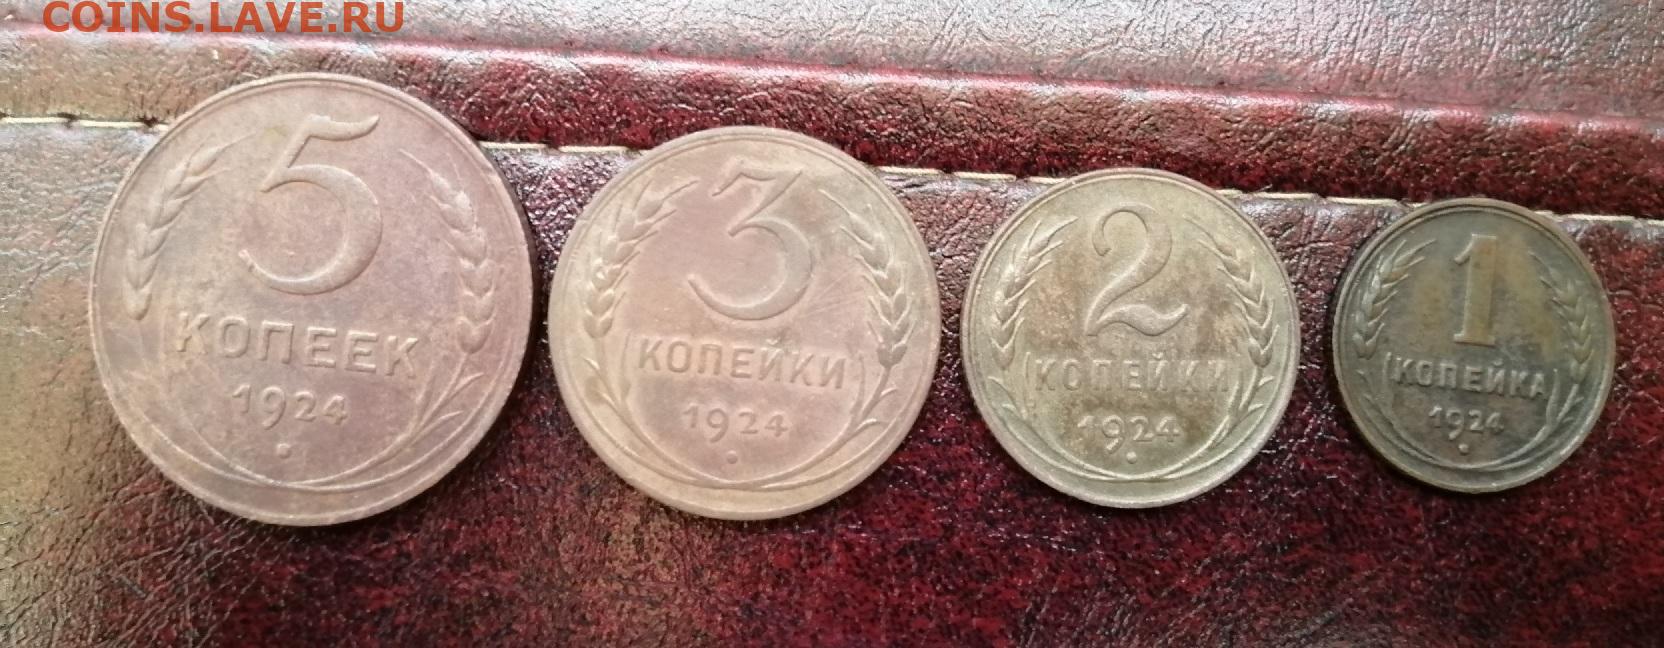 3 рубля 70 копеек. Копейки 92 года российские. 3 Рубля 62 копейки. Монета3 копе1903. Три рубля шестьдесят две копейки.